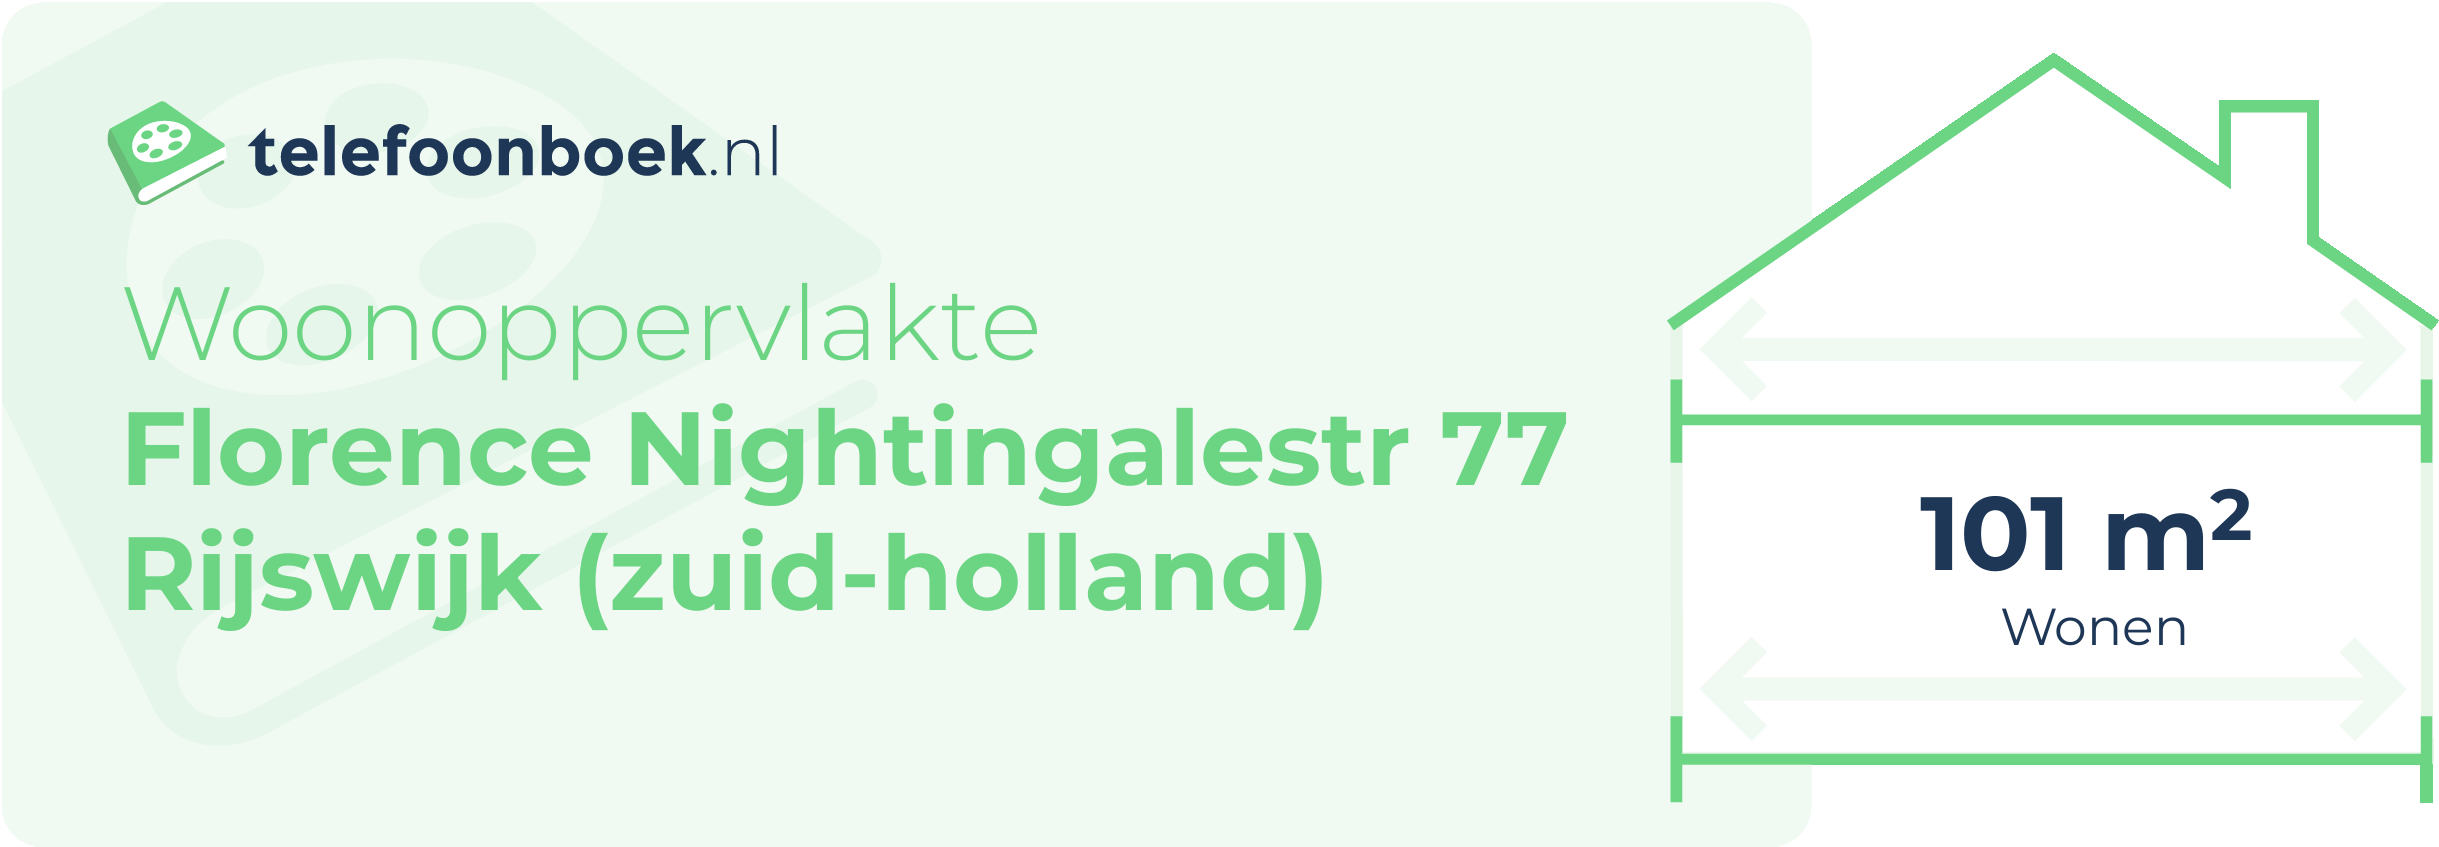 Woonoppervlakte Florence Nightingalestr 77 Rijswijk (Zuid-Holland)